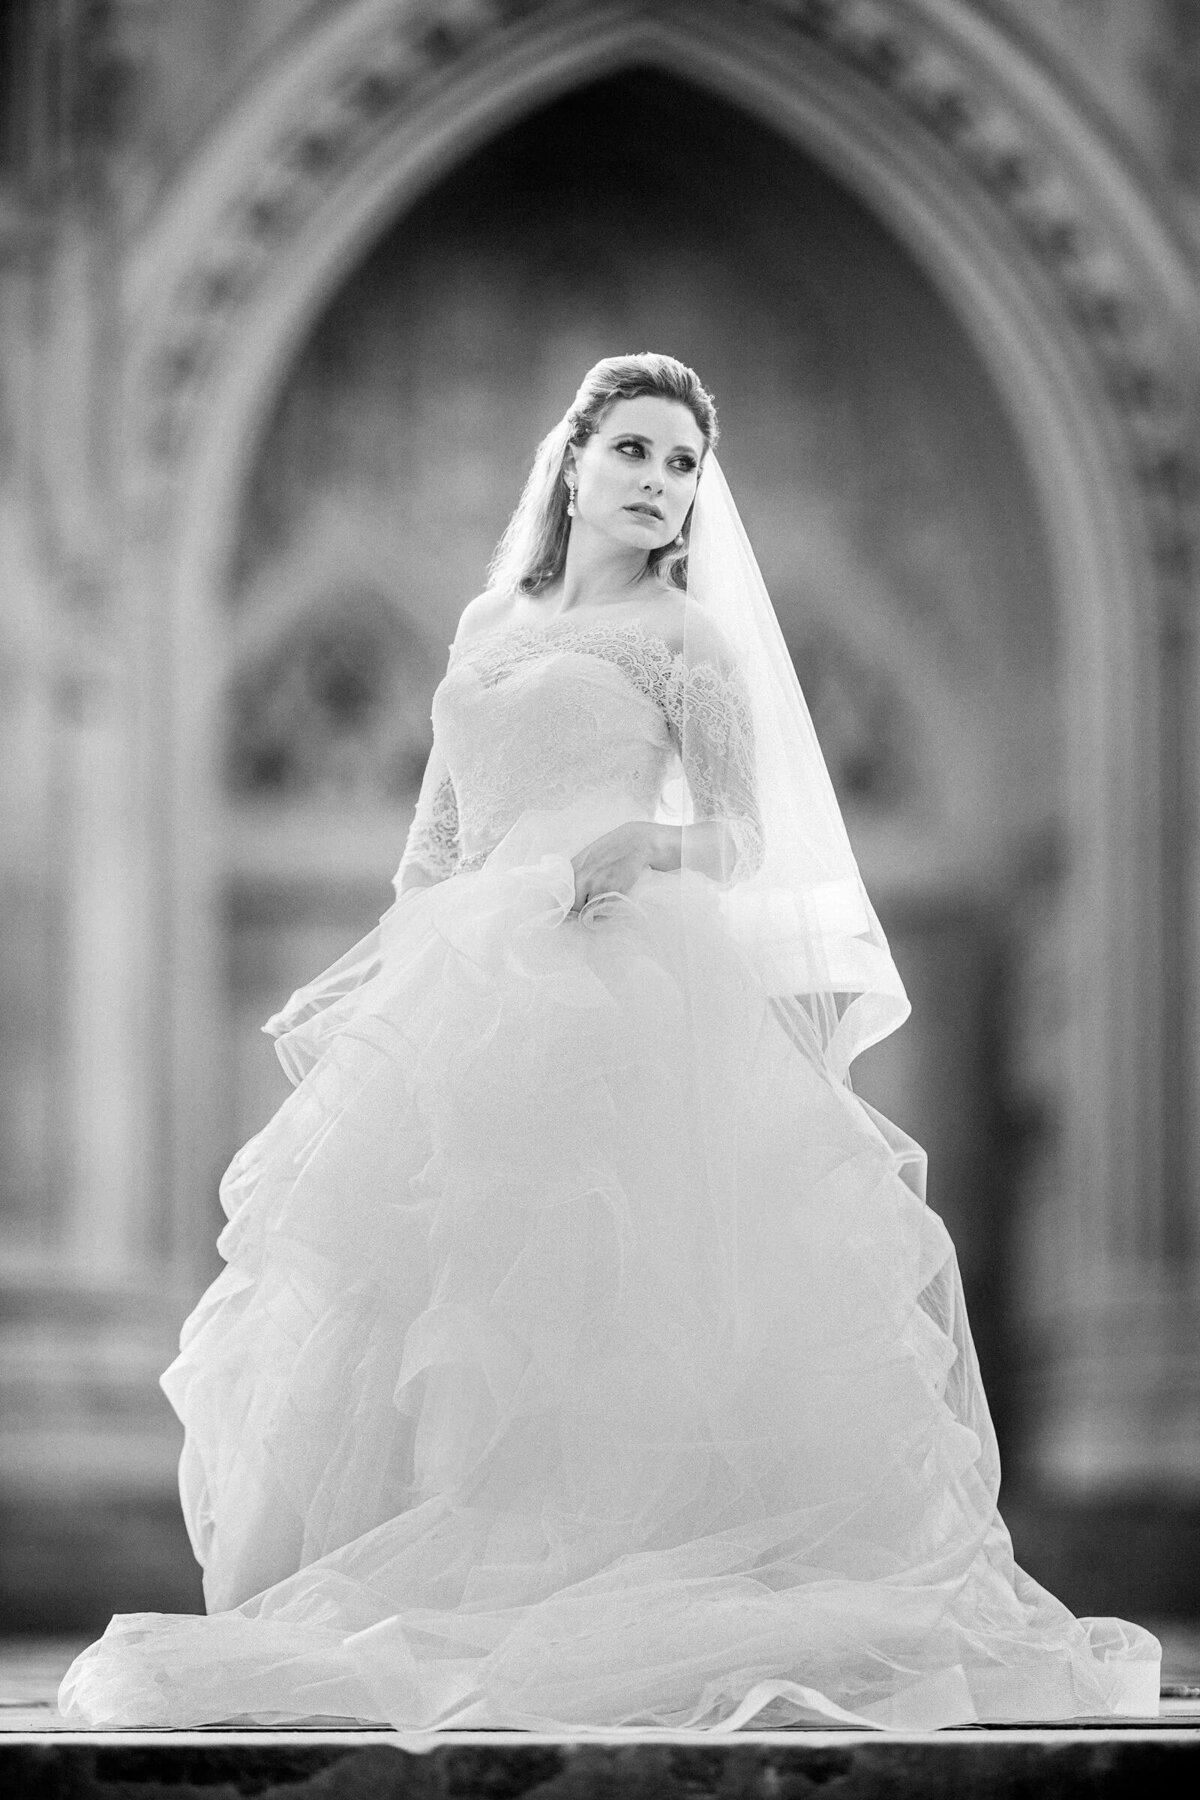 A bride in a big dress looking over her shoulder